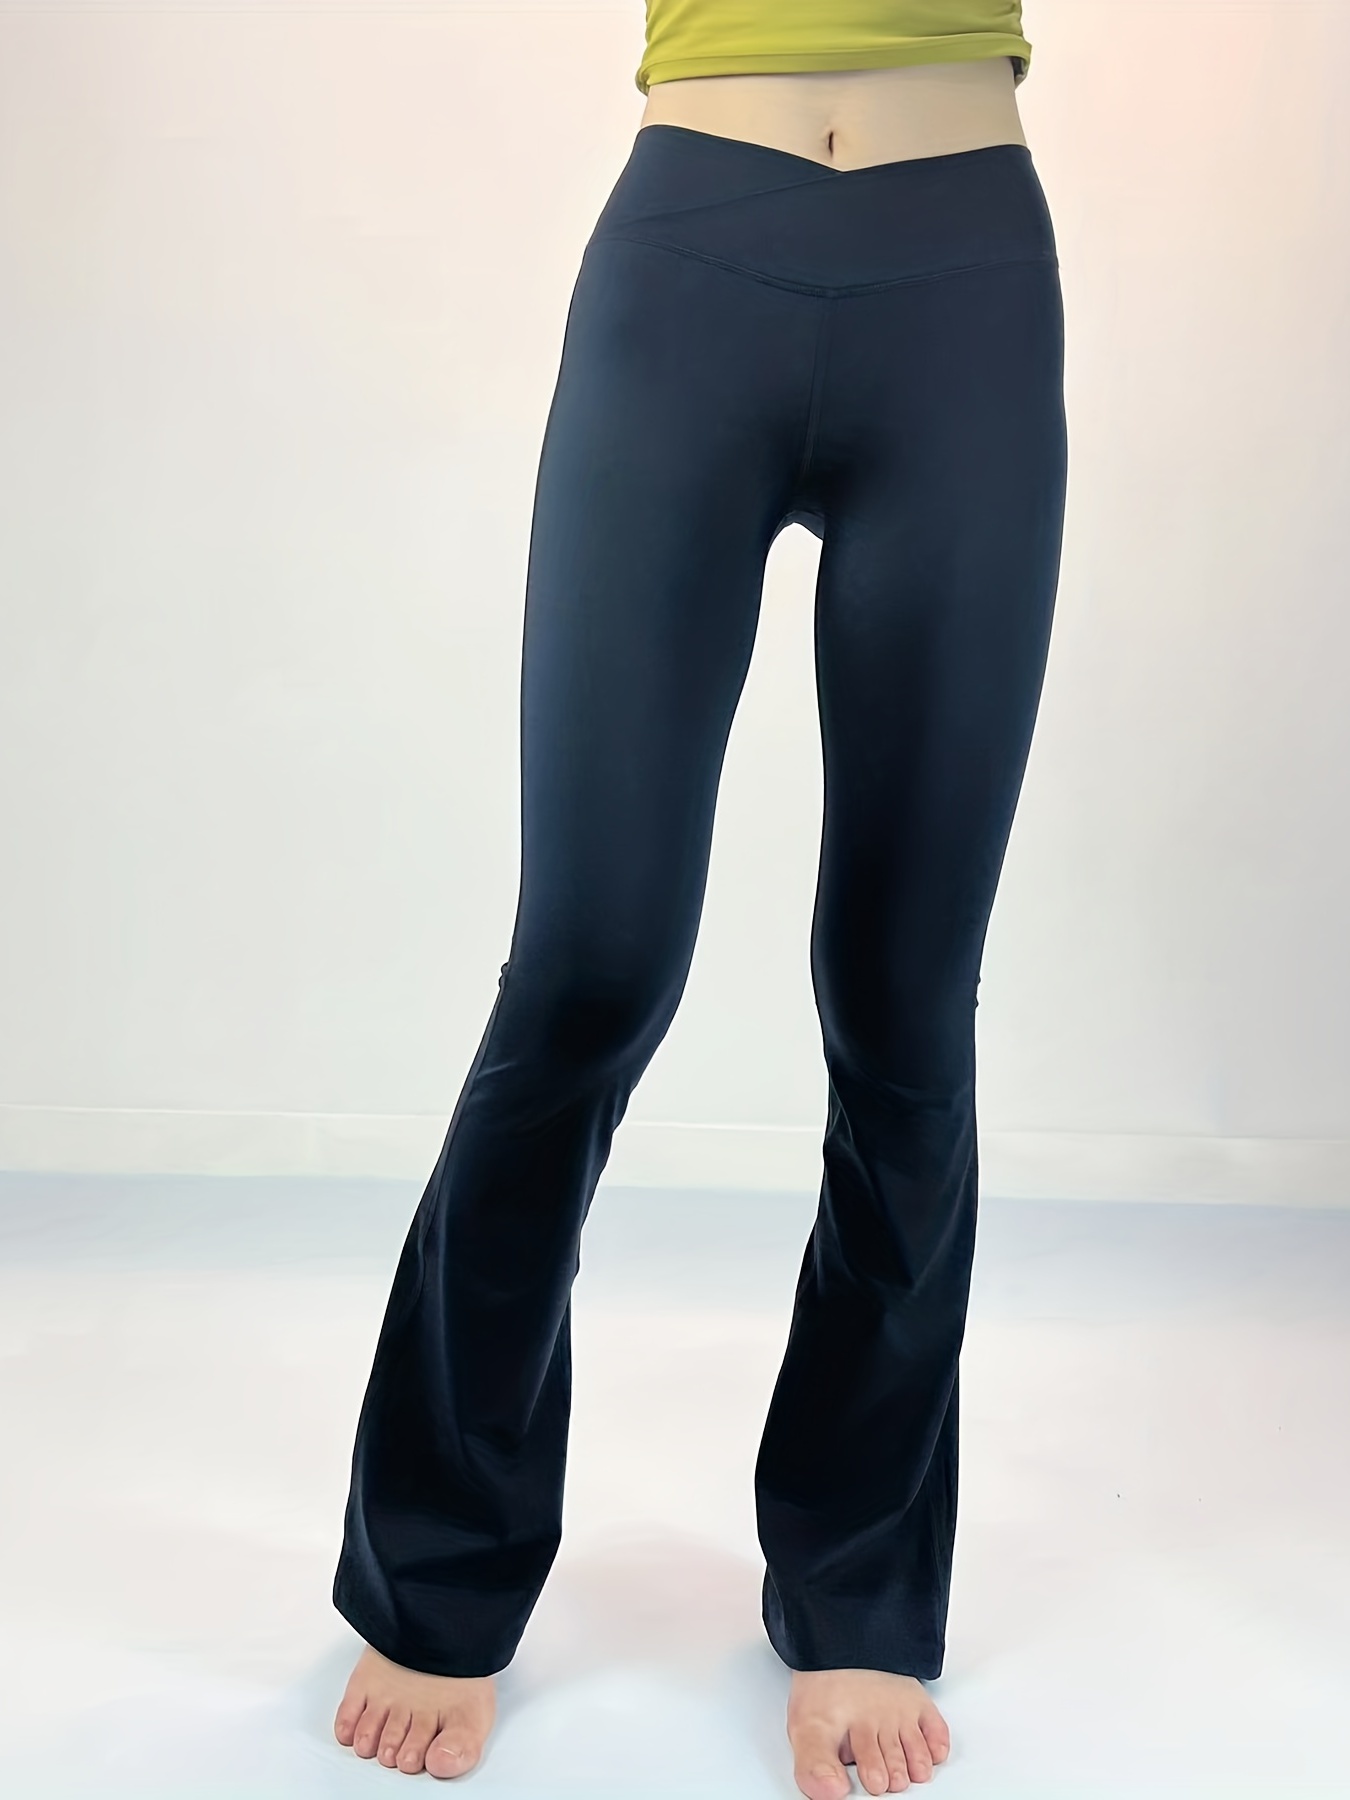 Lucy Powermax Women's Flare Leggings Size Small Black Yoga Pants